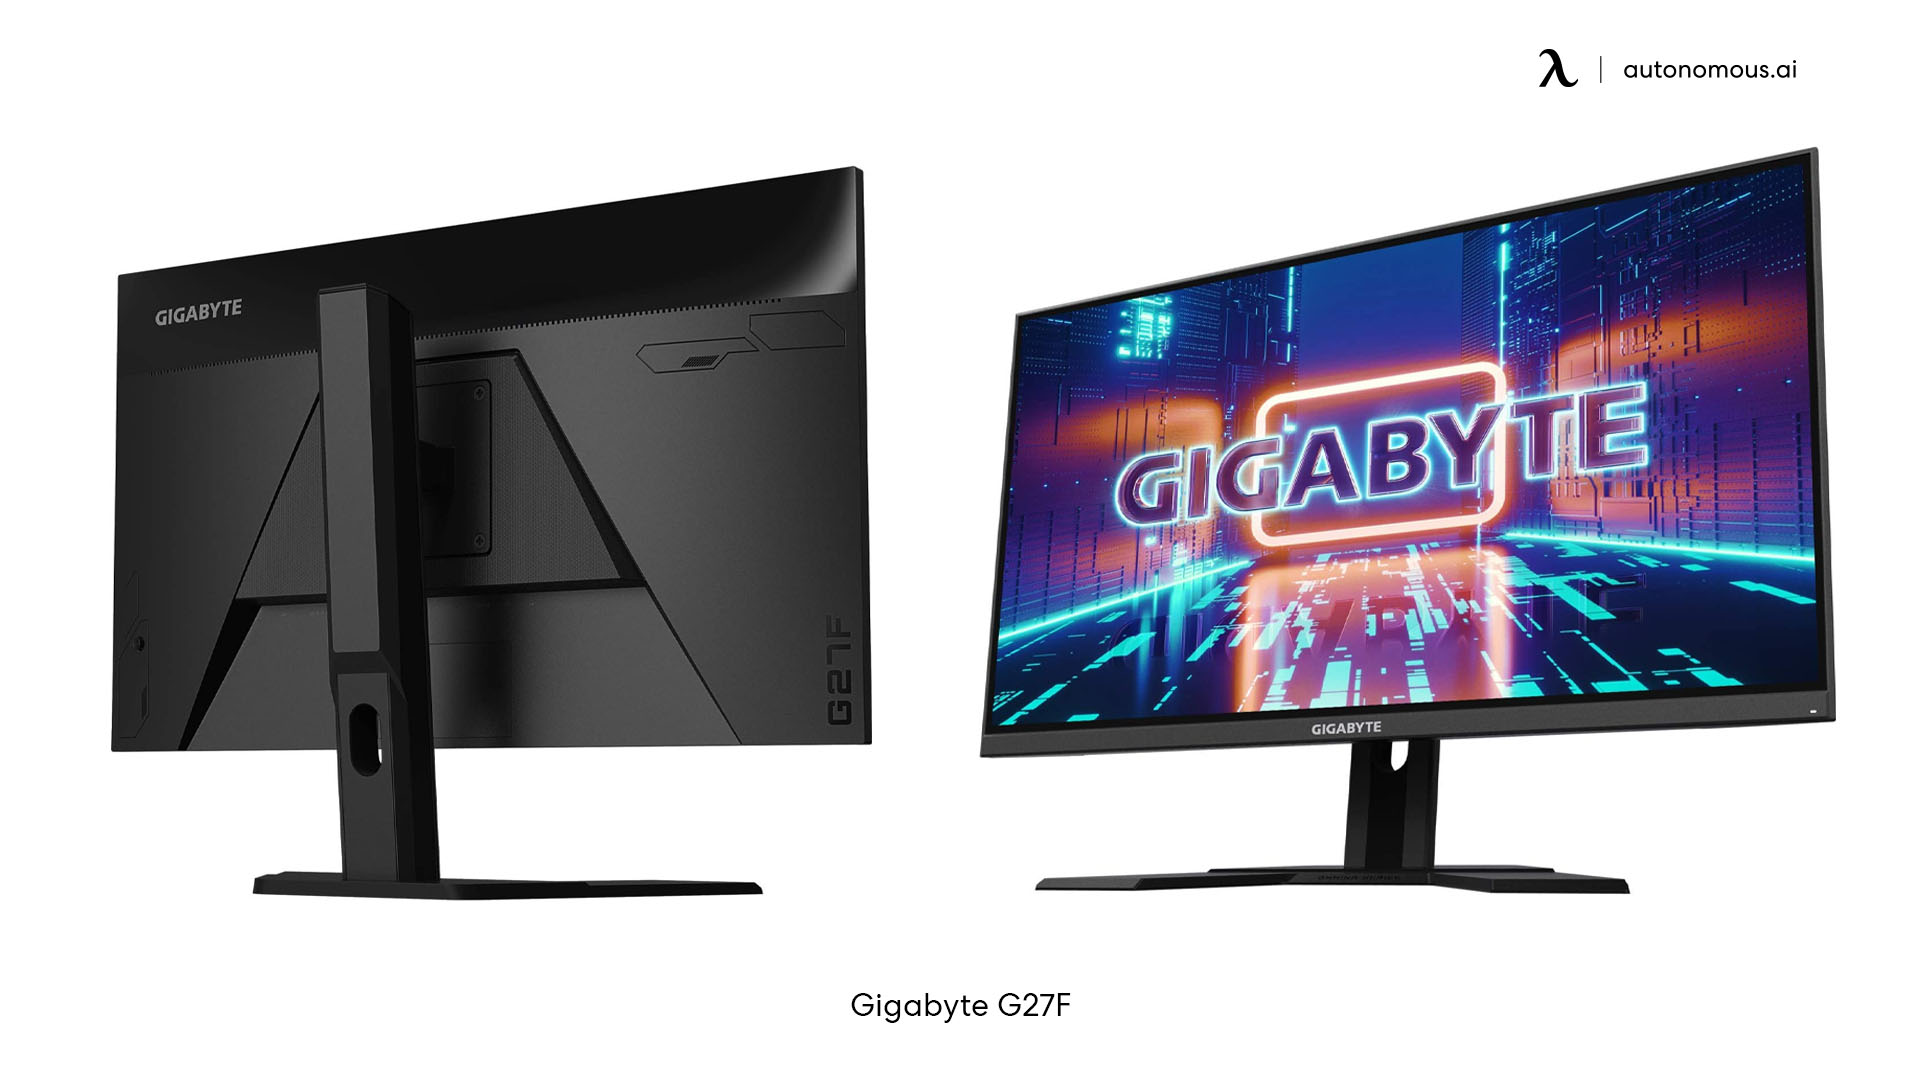 Gigabyte G27F 27-inch gaming monitor